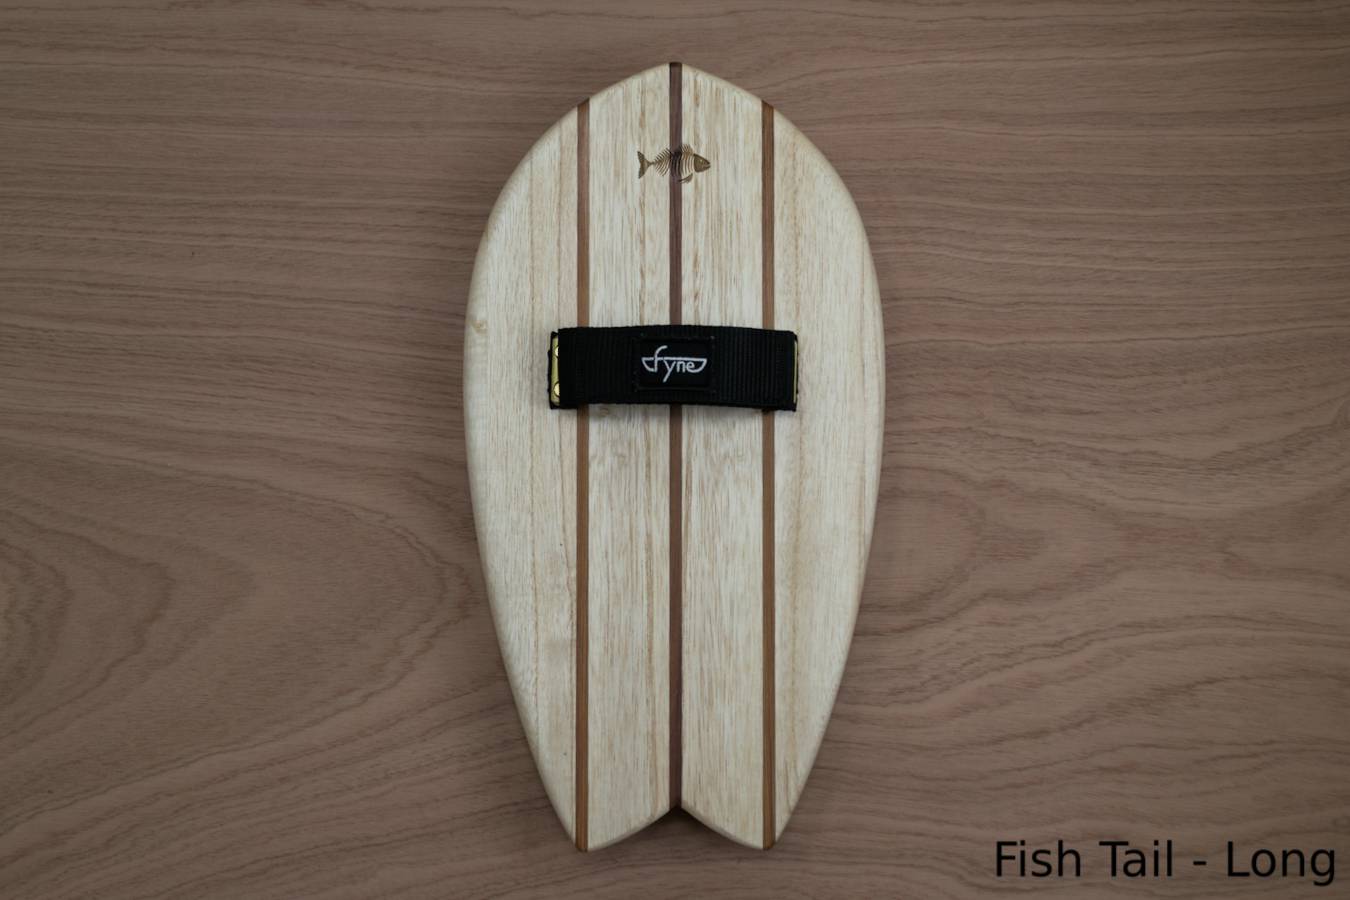 Fish Tail (long) wooden handplane handmade by Fyne Boat Kits